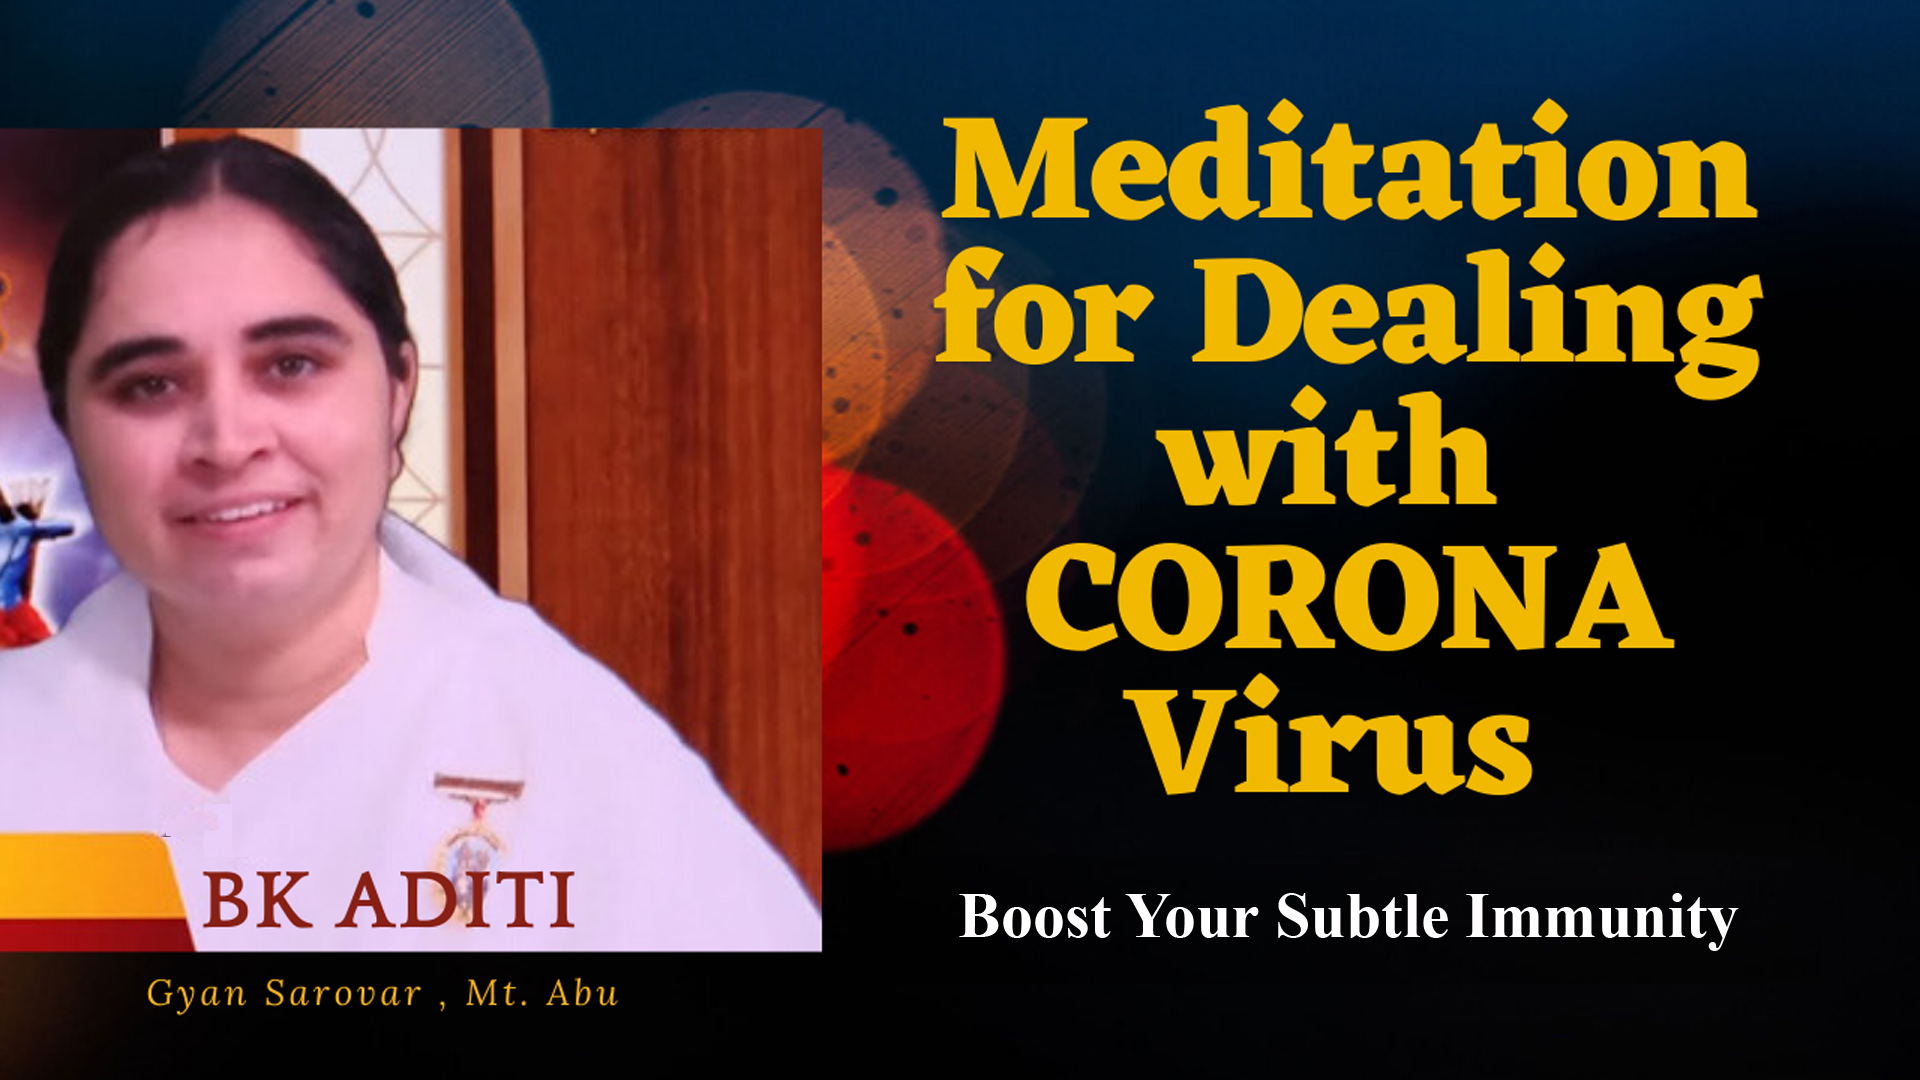 Meditation for dealing with Coronavirus by BK Aditi 